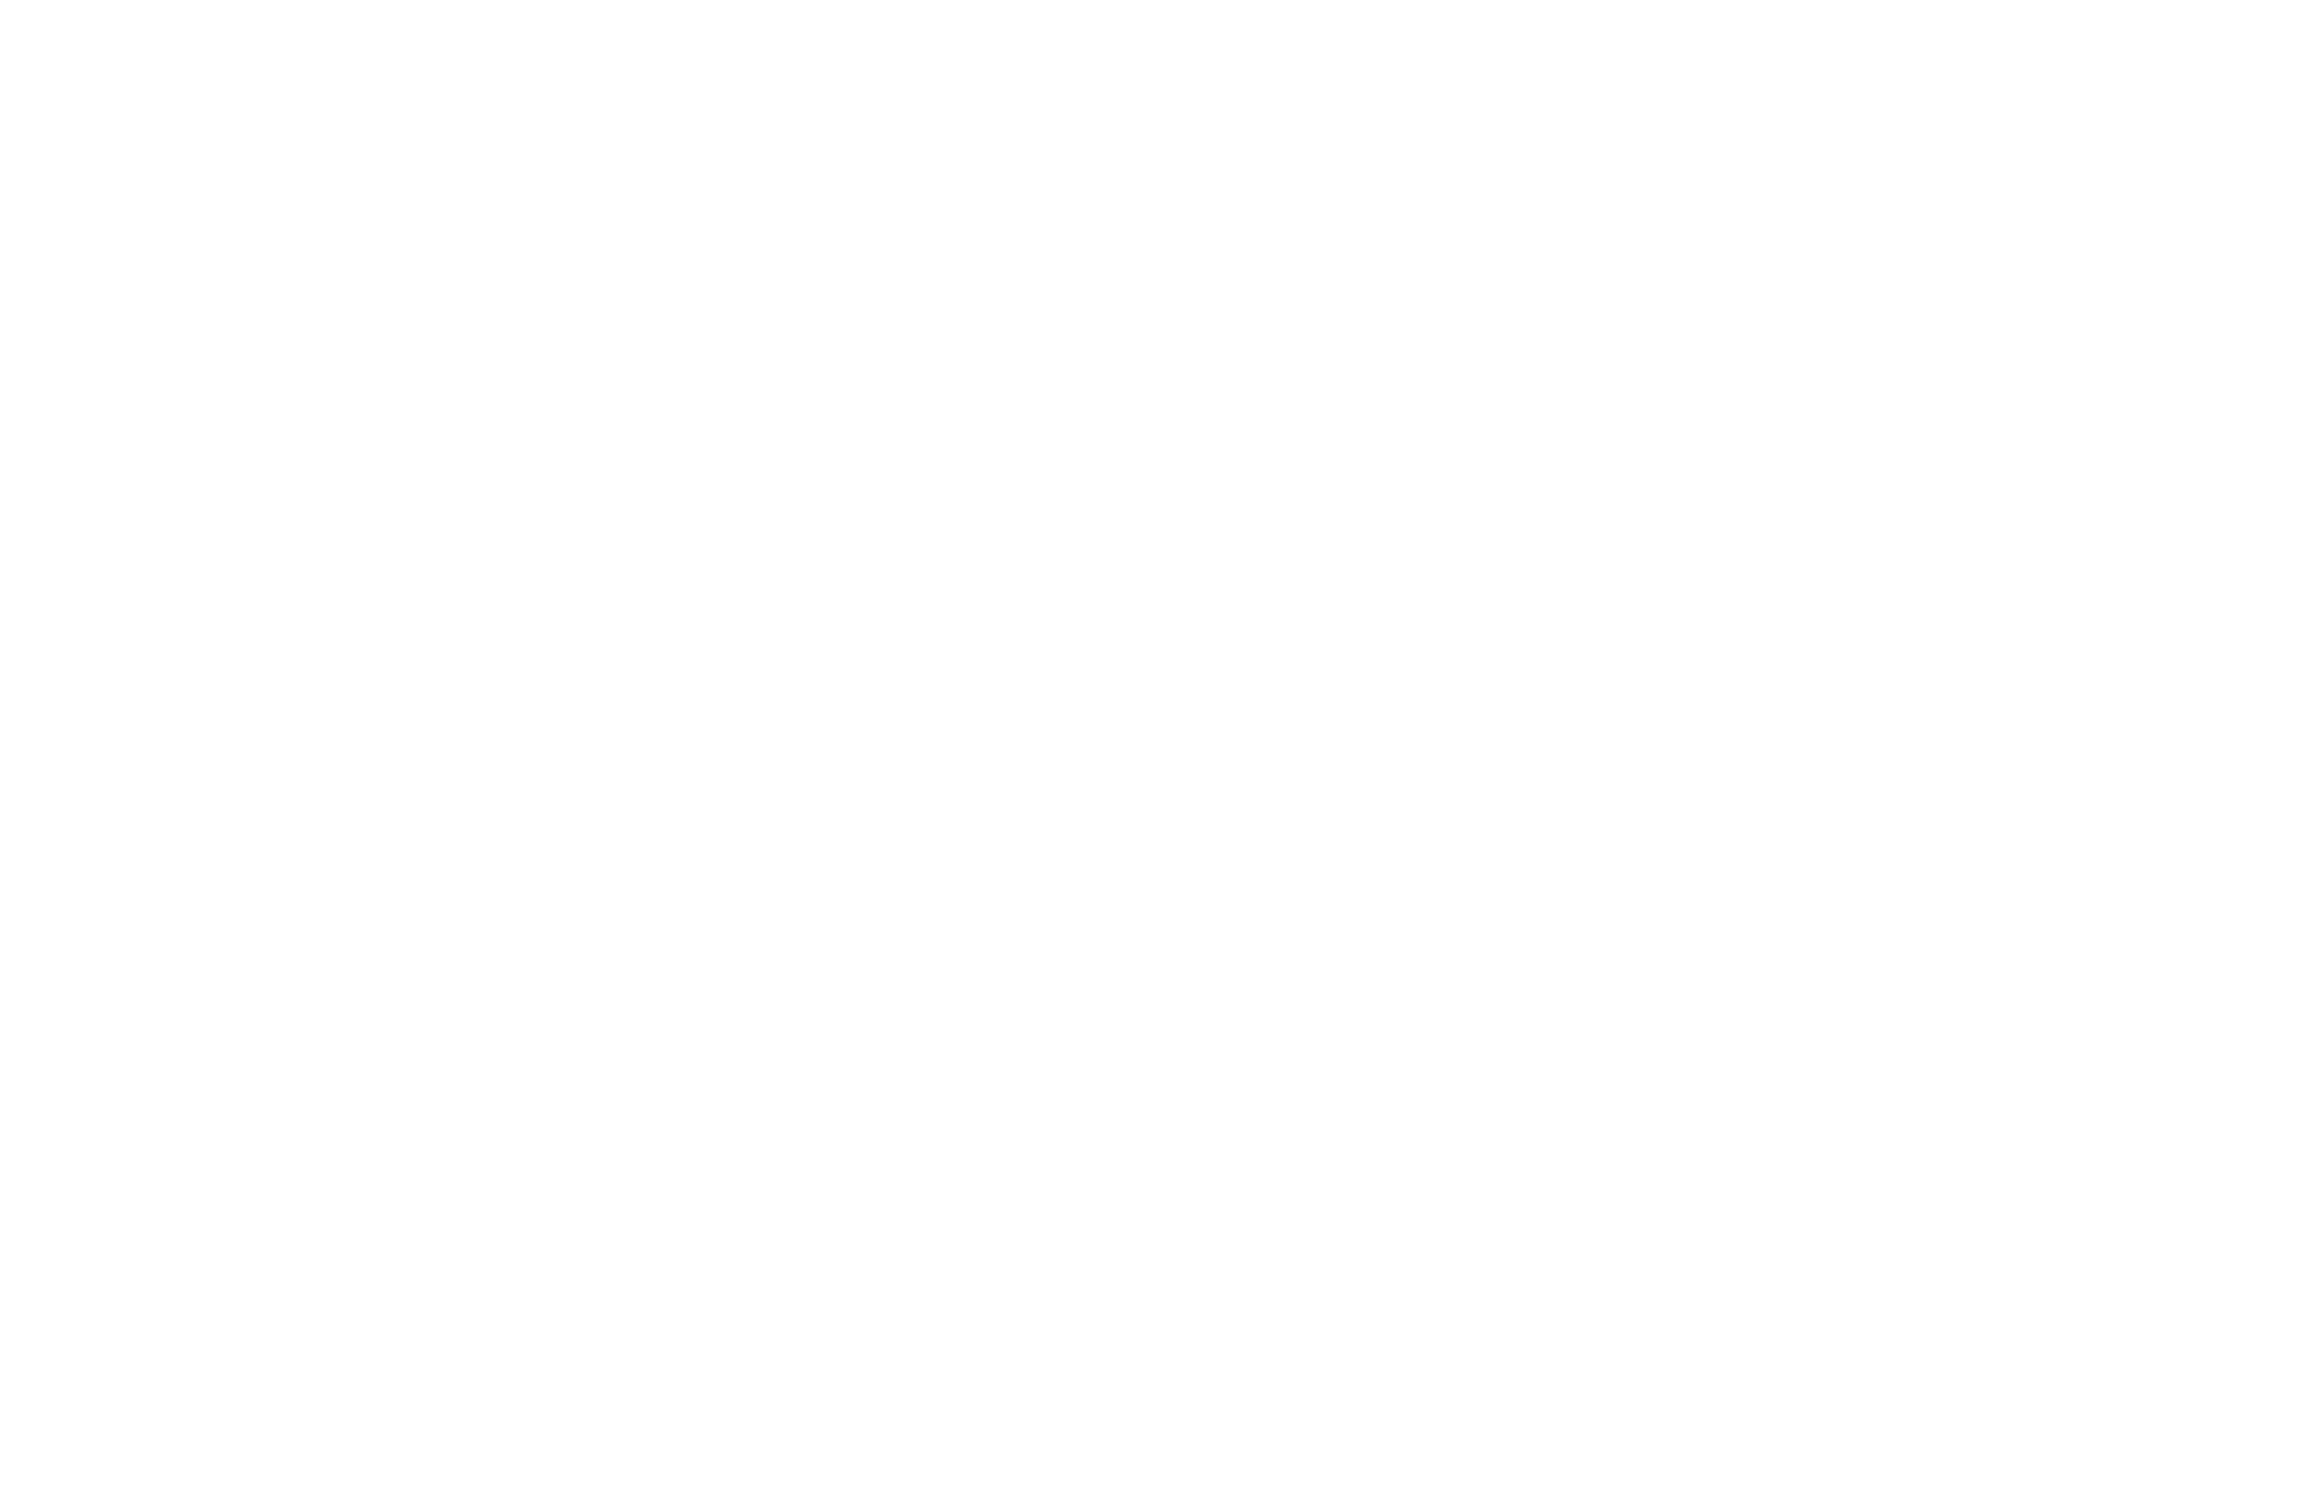 NiagaraSignSupplies - 